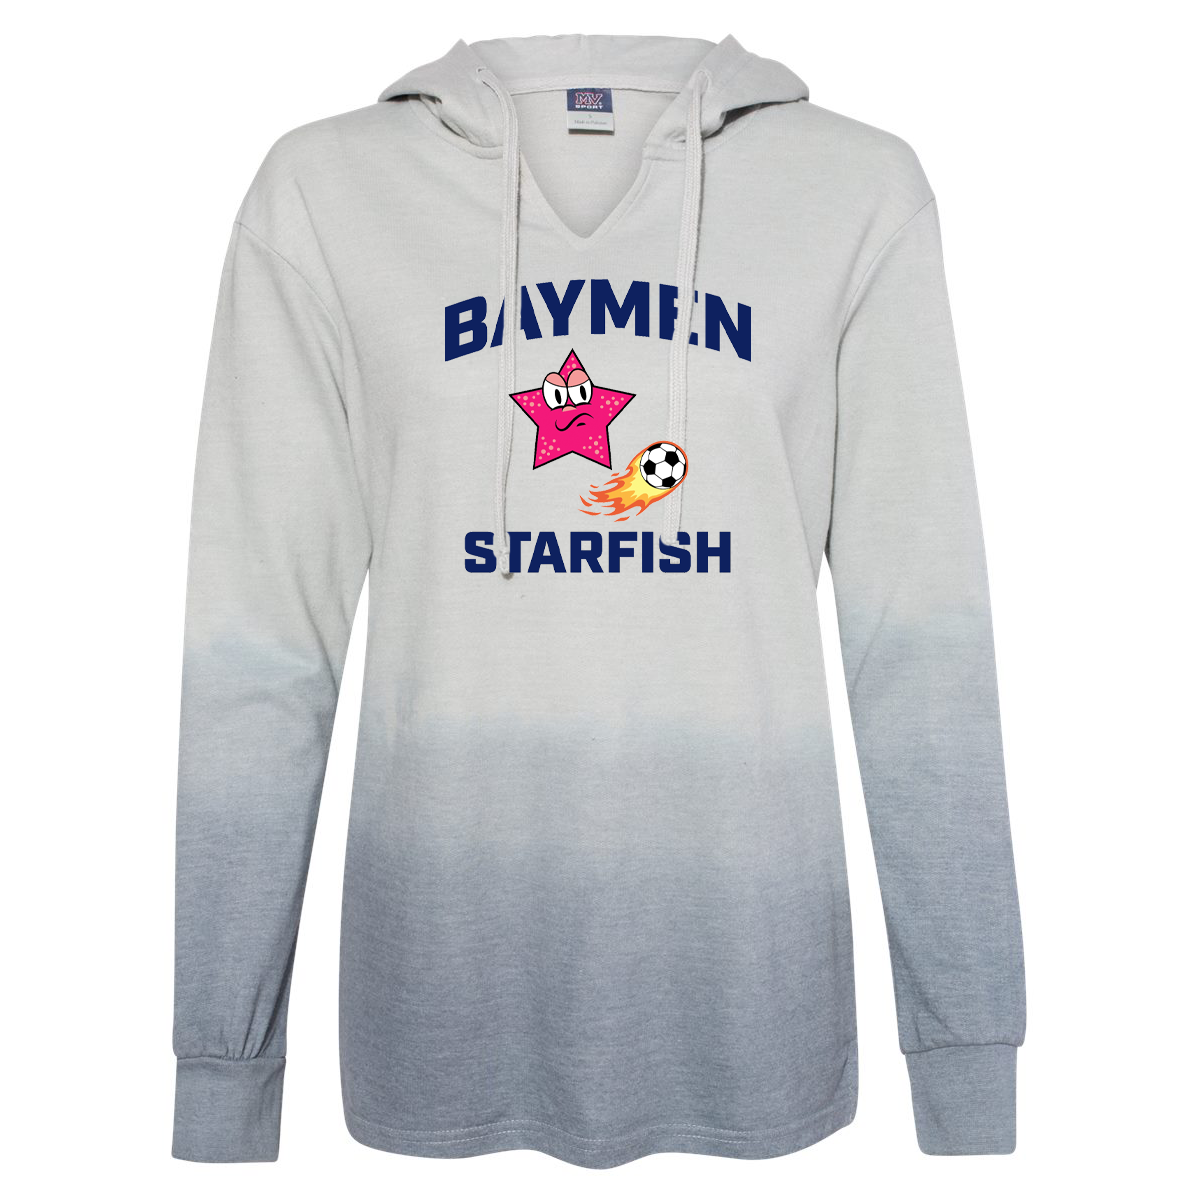 Baymen Starfish U12 Women's French Terry Ombre Hooded Sweatshirt